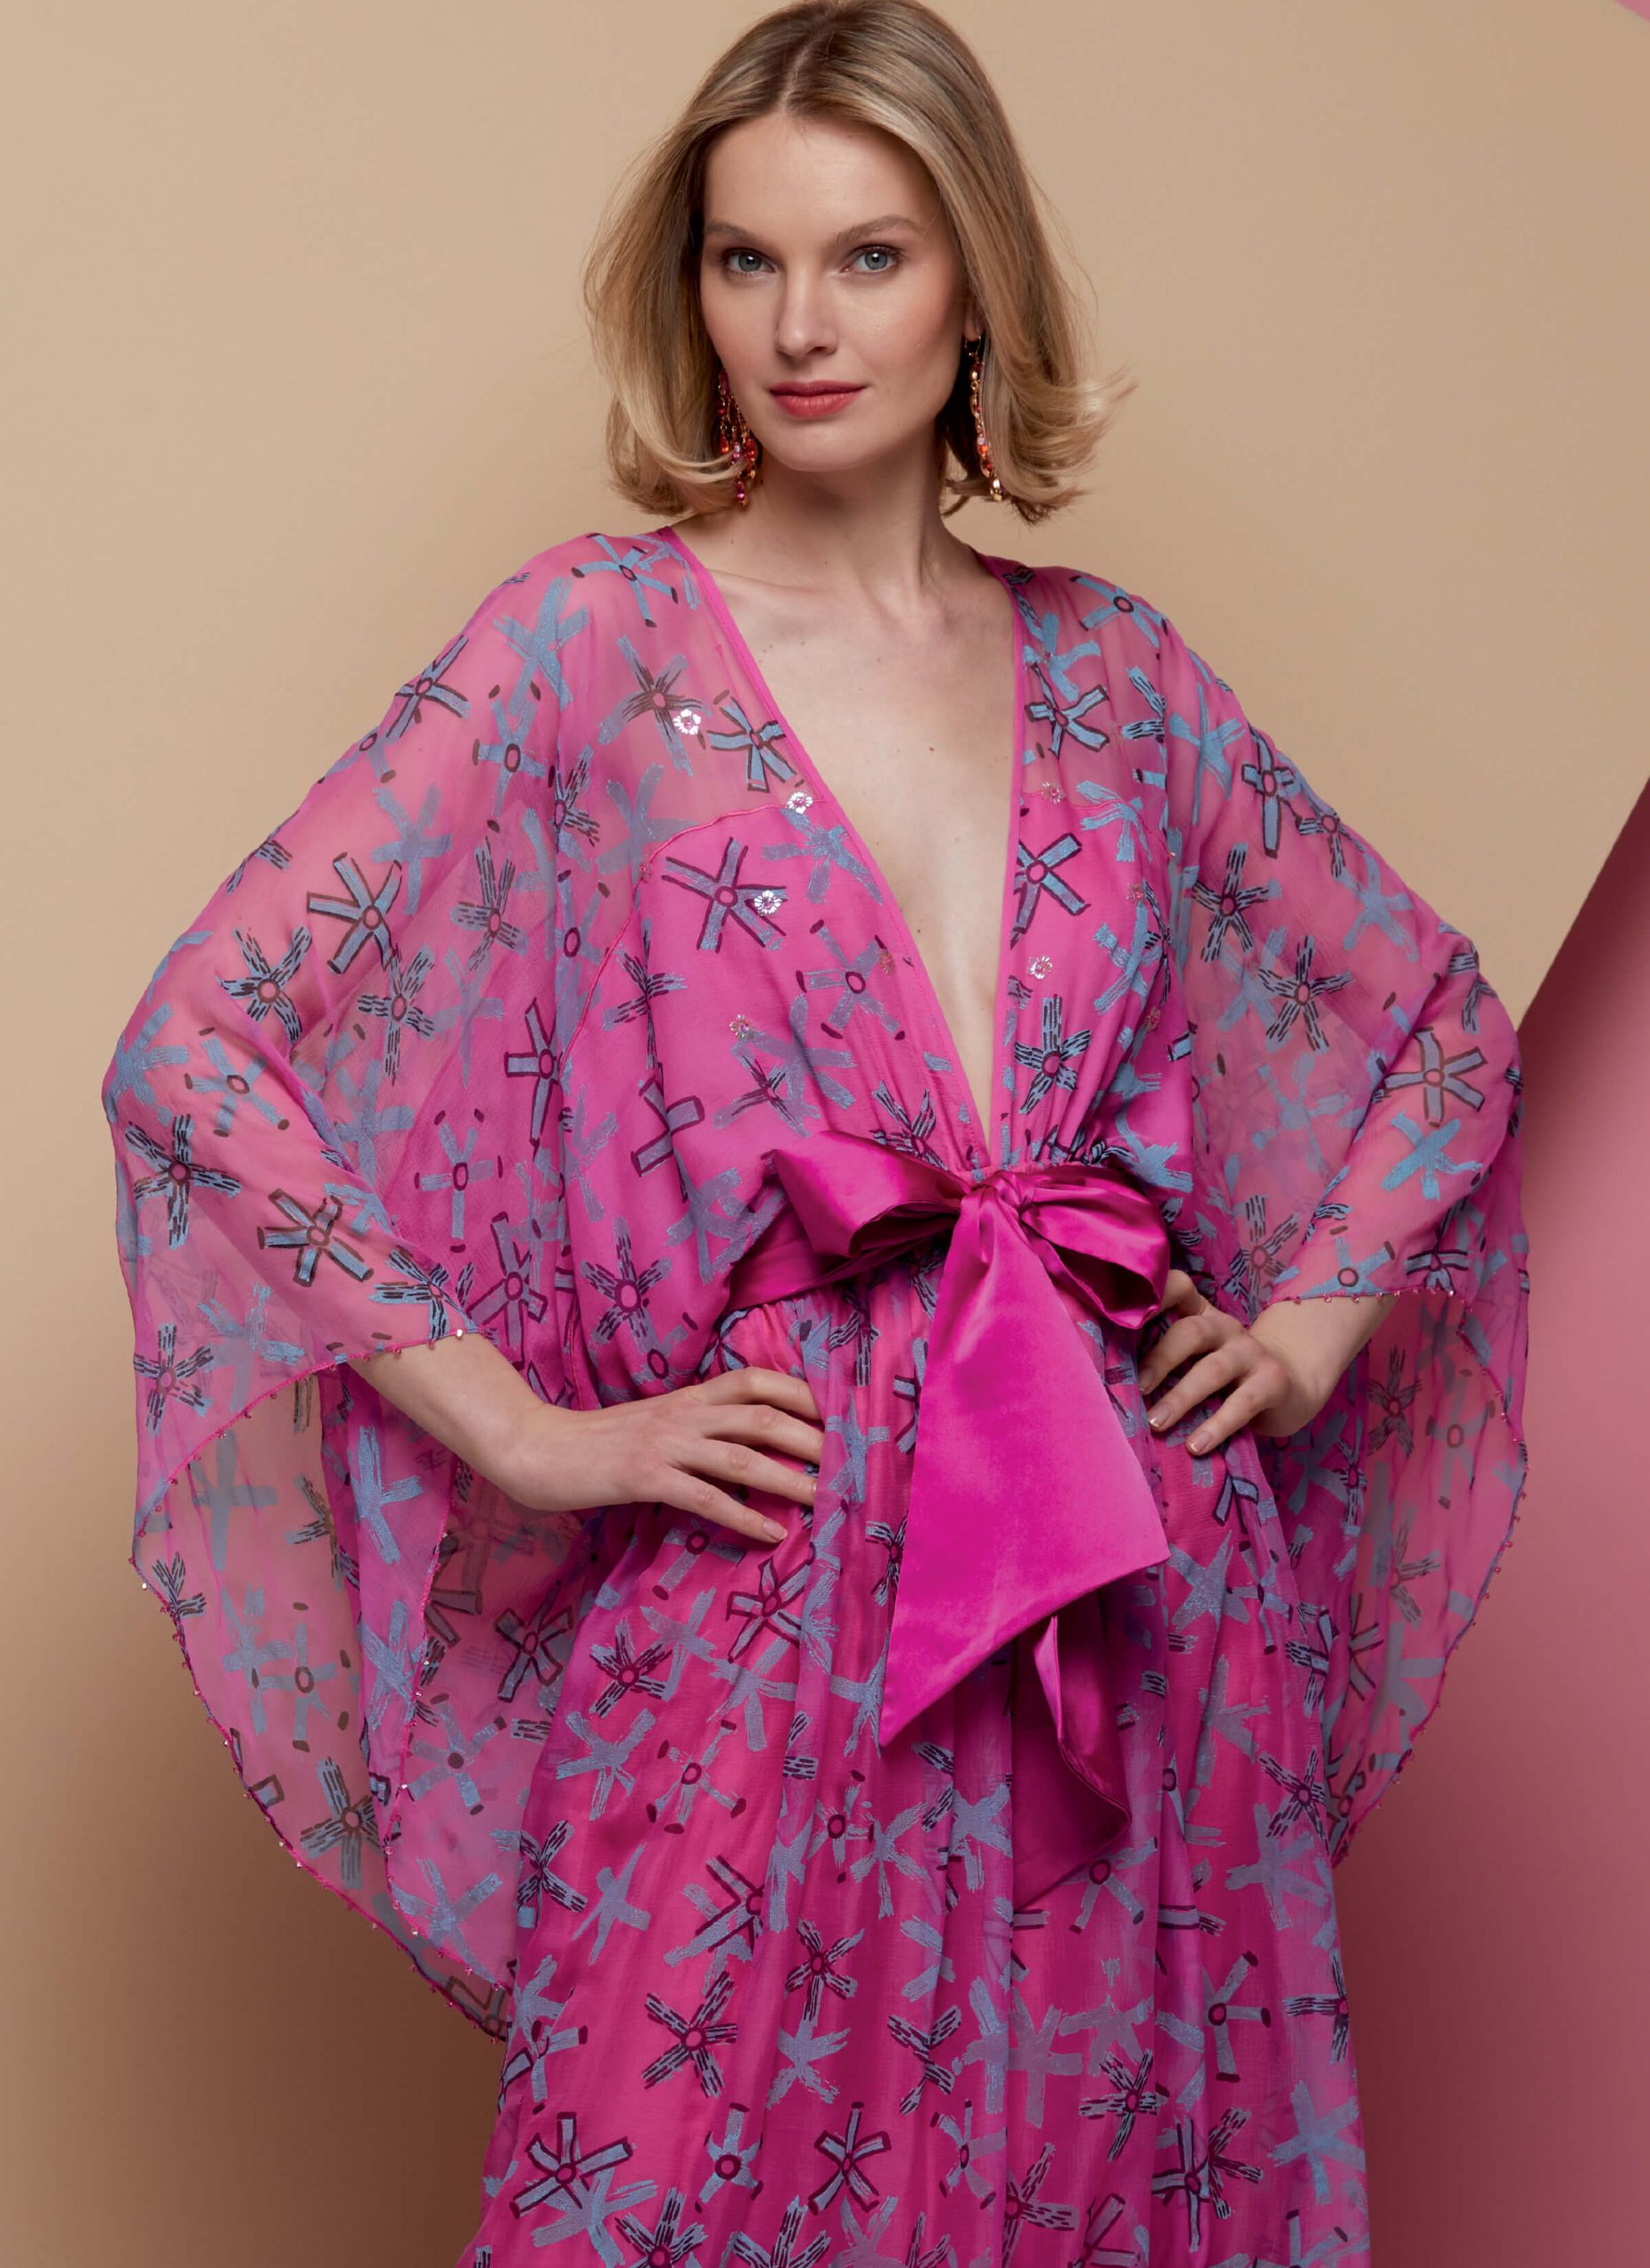 Vogue Patterns V1627 Zandra Rhodes Misses' Special Occasion Dress and Sash